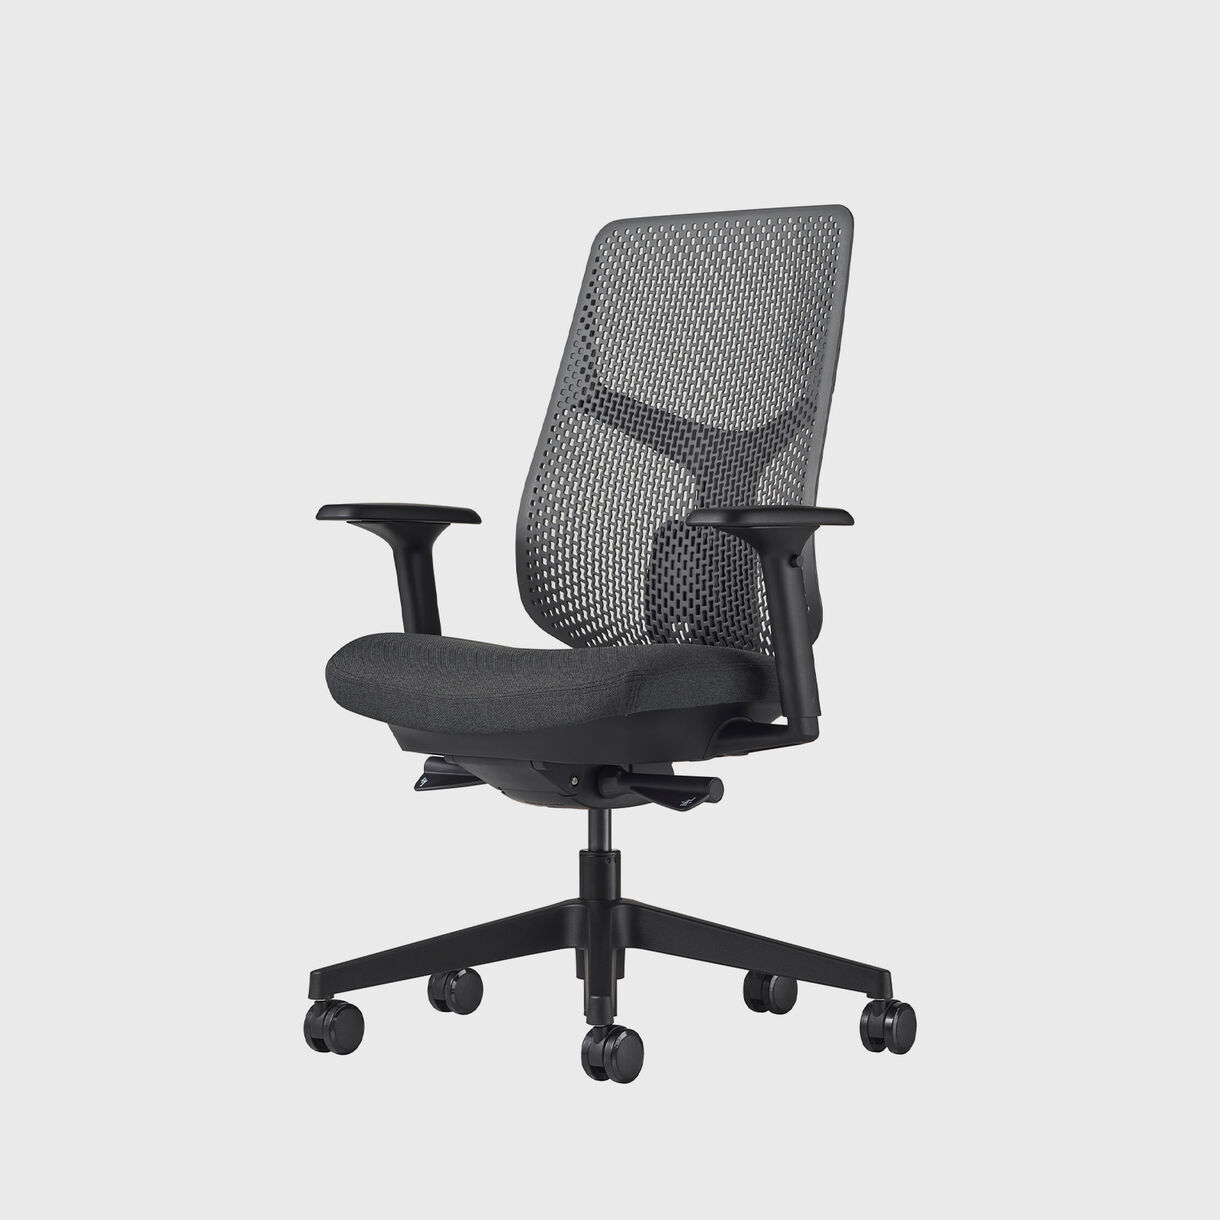 Verus TriFlex Back Task Chair - Black Frame, Dark Carbon TriFlex & Cinder Upholstery - Fully Adjustable Arms